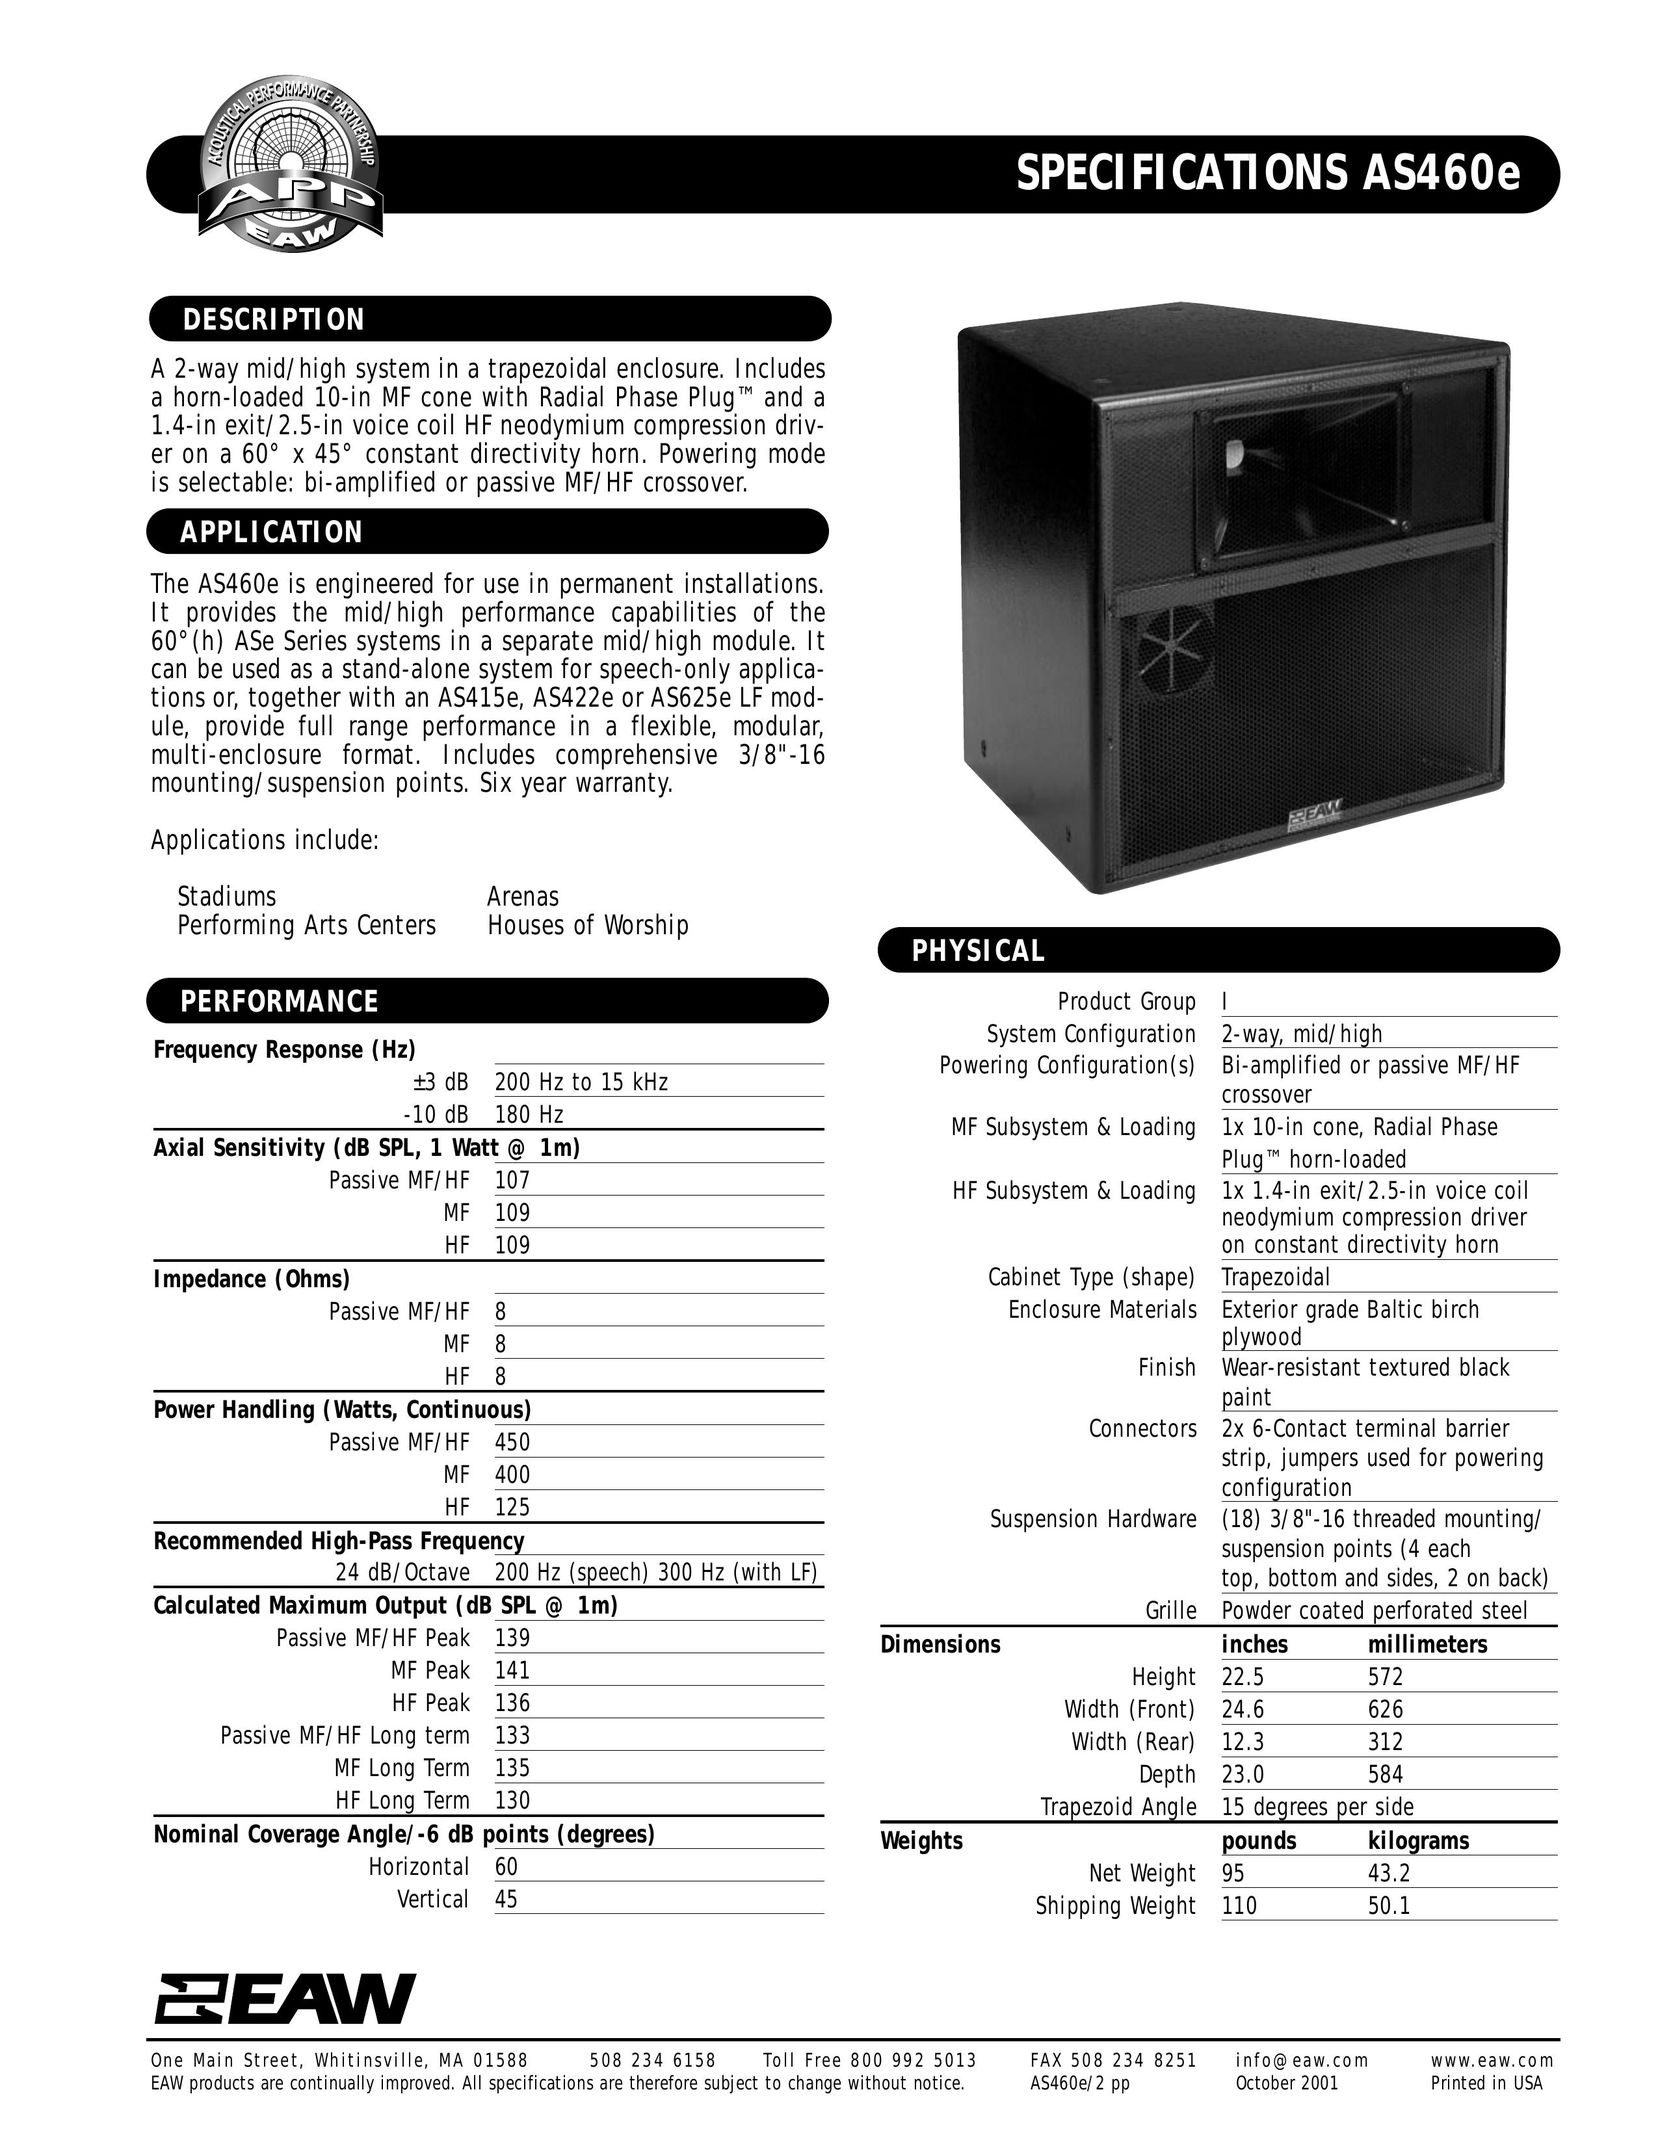 EAW AS460e Speaker User Manual